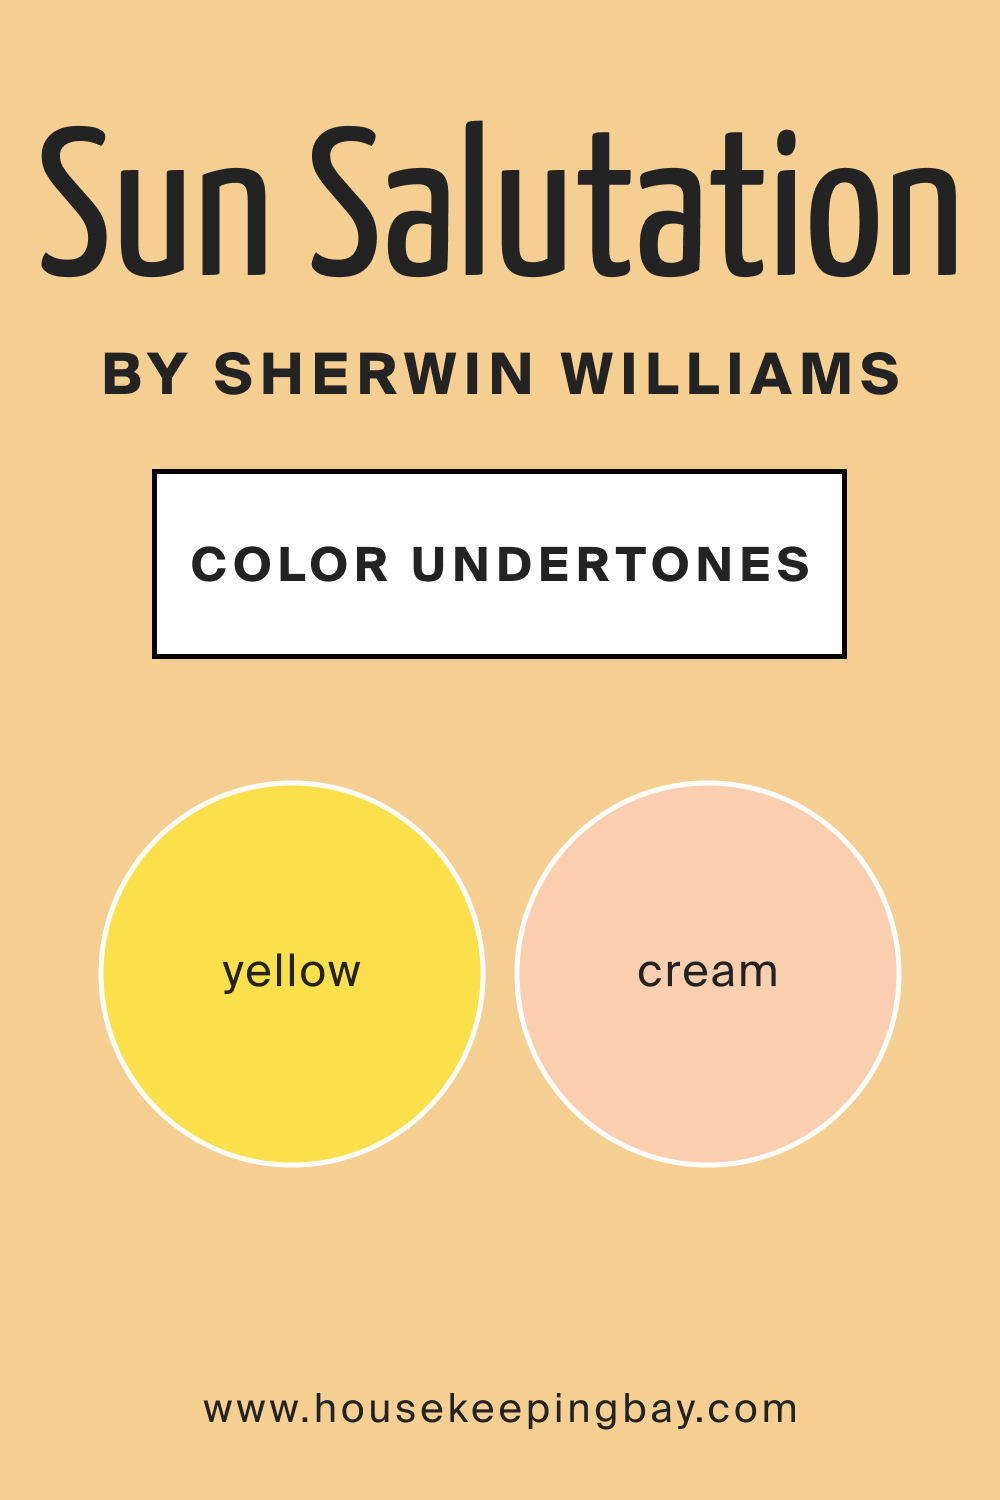 Sun Salutation SW 9664 by Sherwin Williams Color Undertone